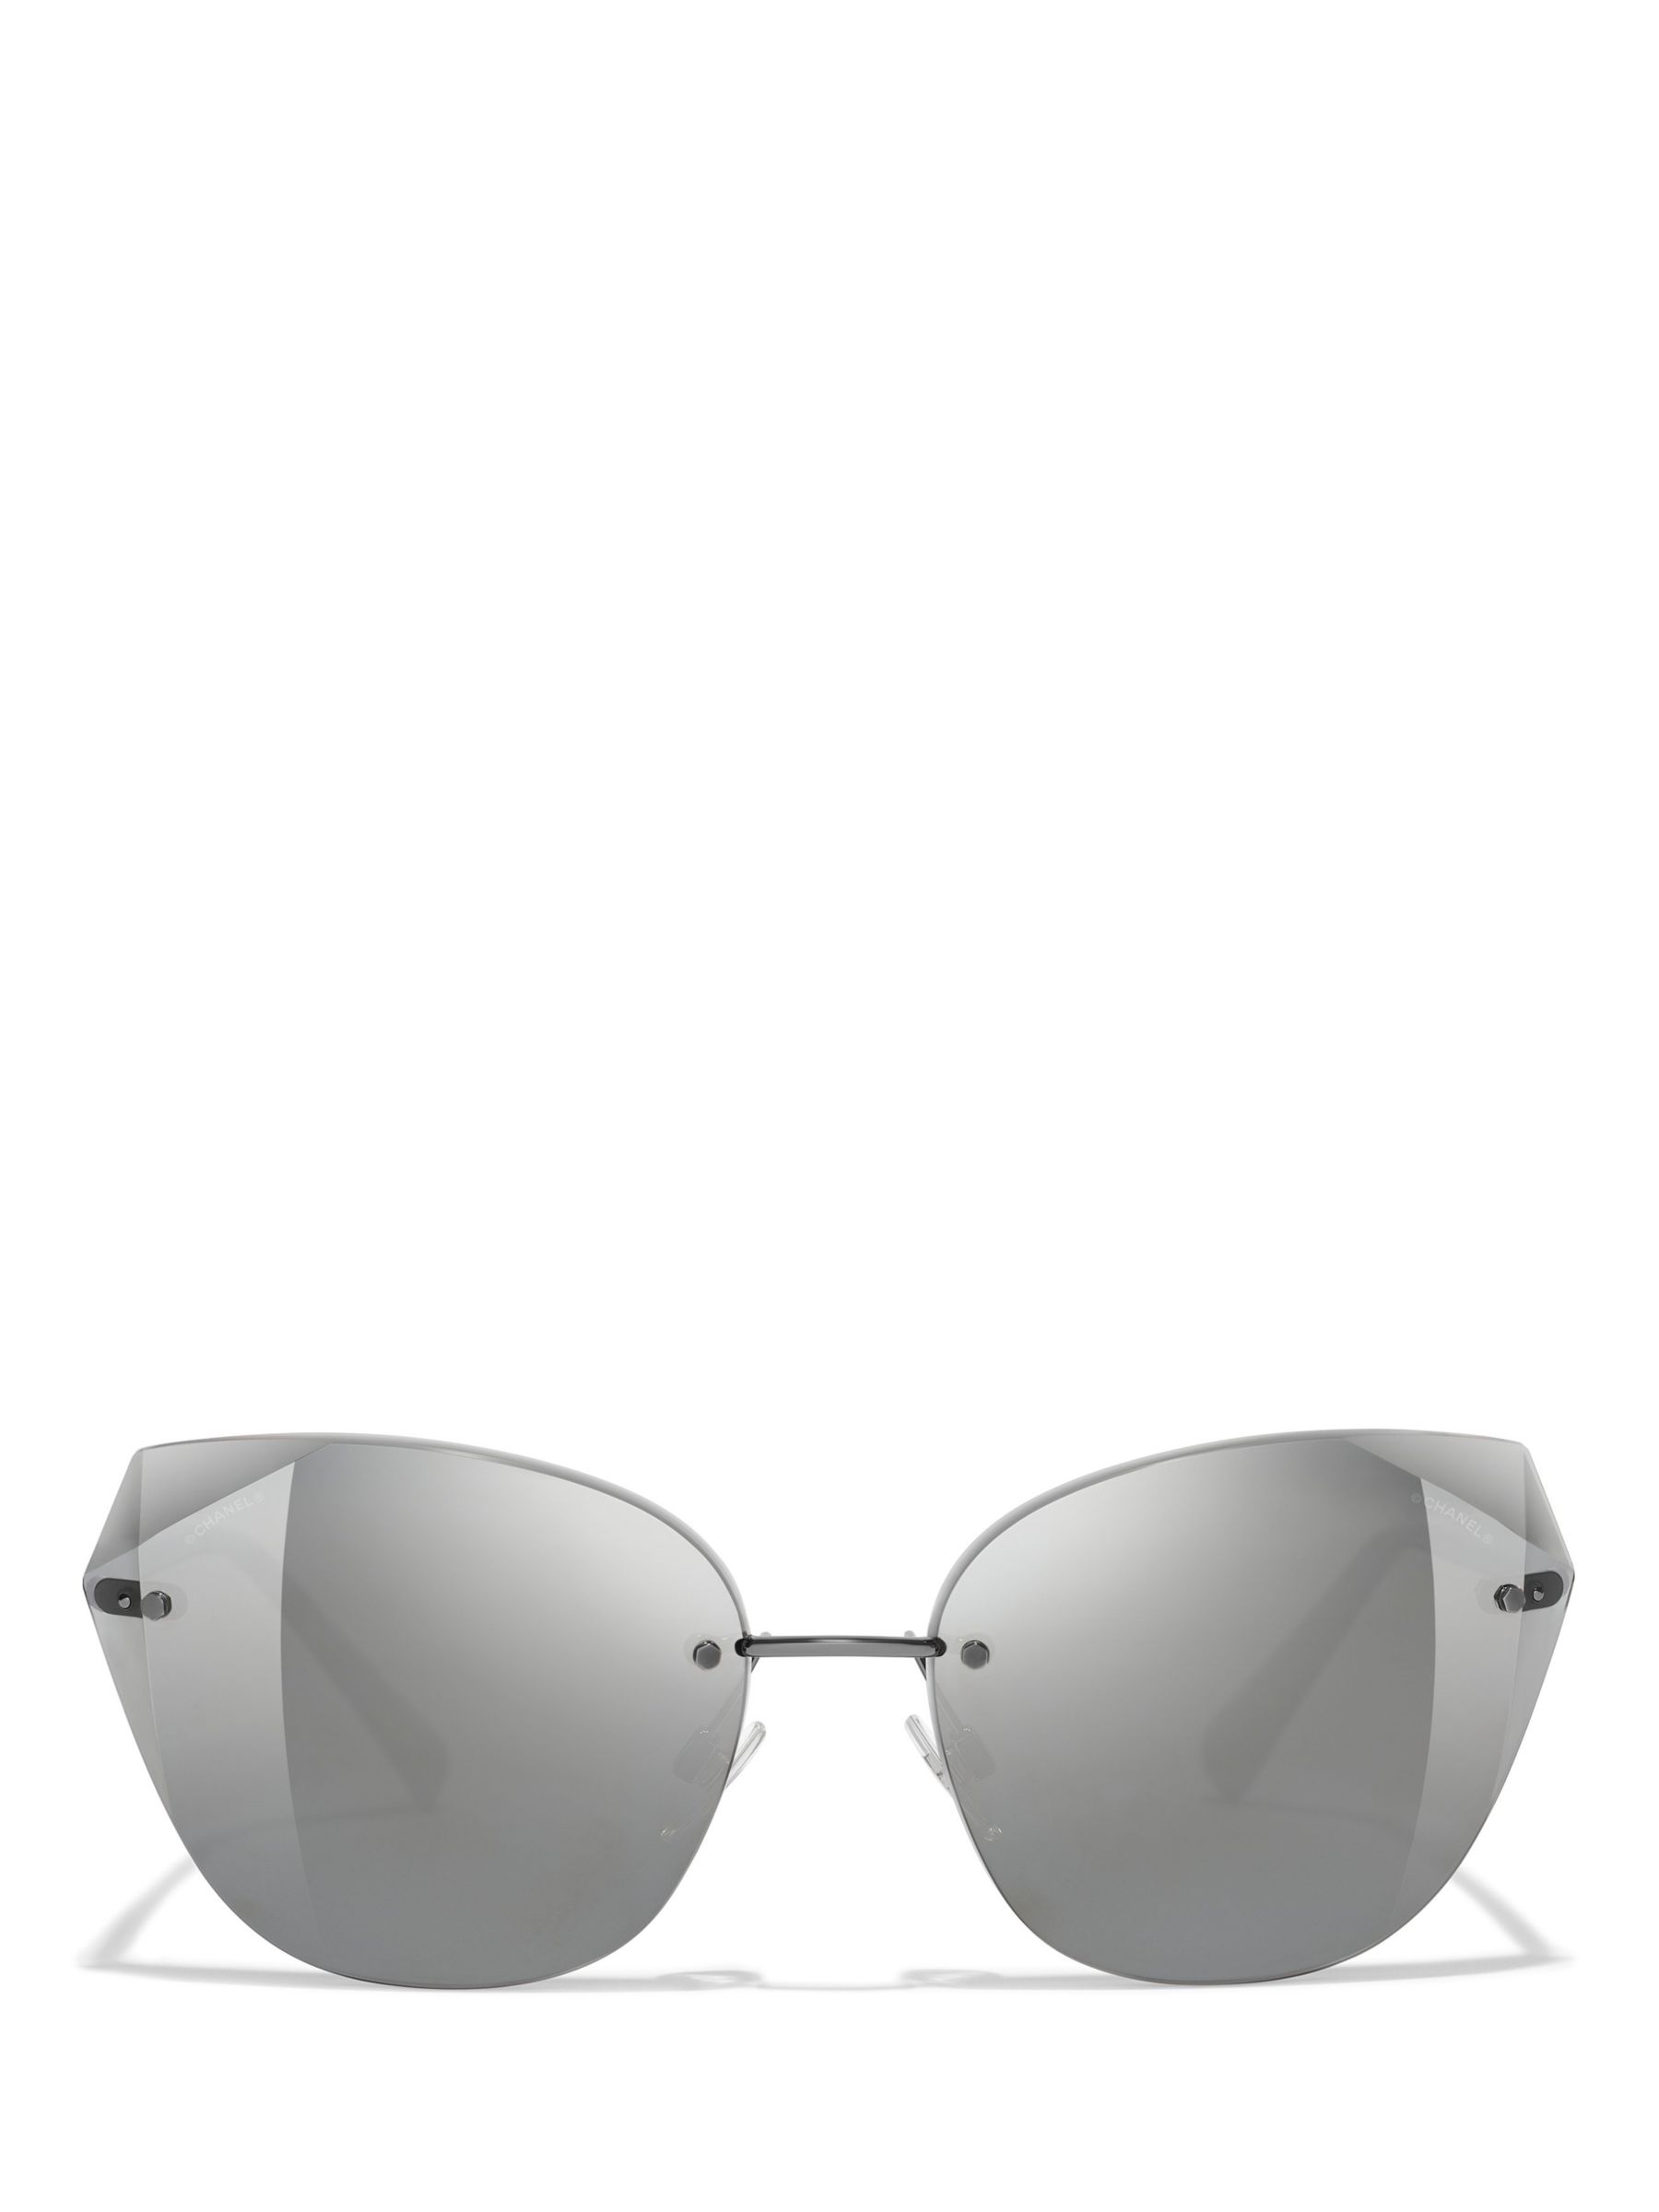 Chanel 4237 - Sunglasses